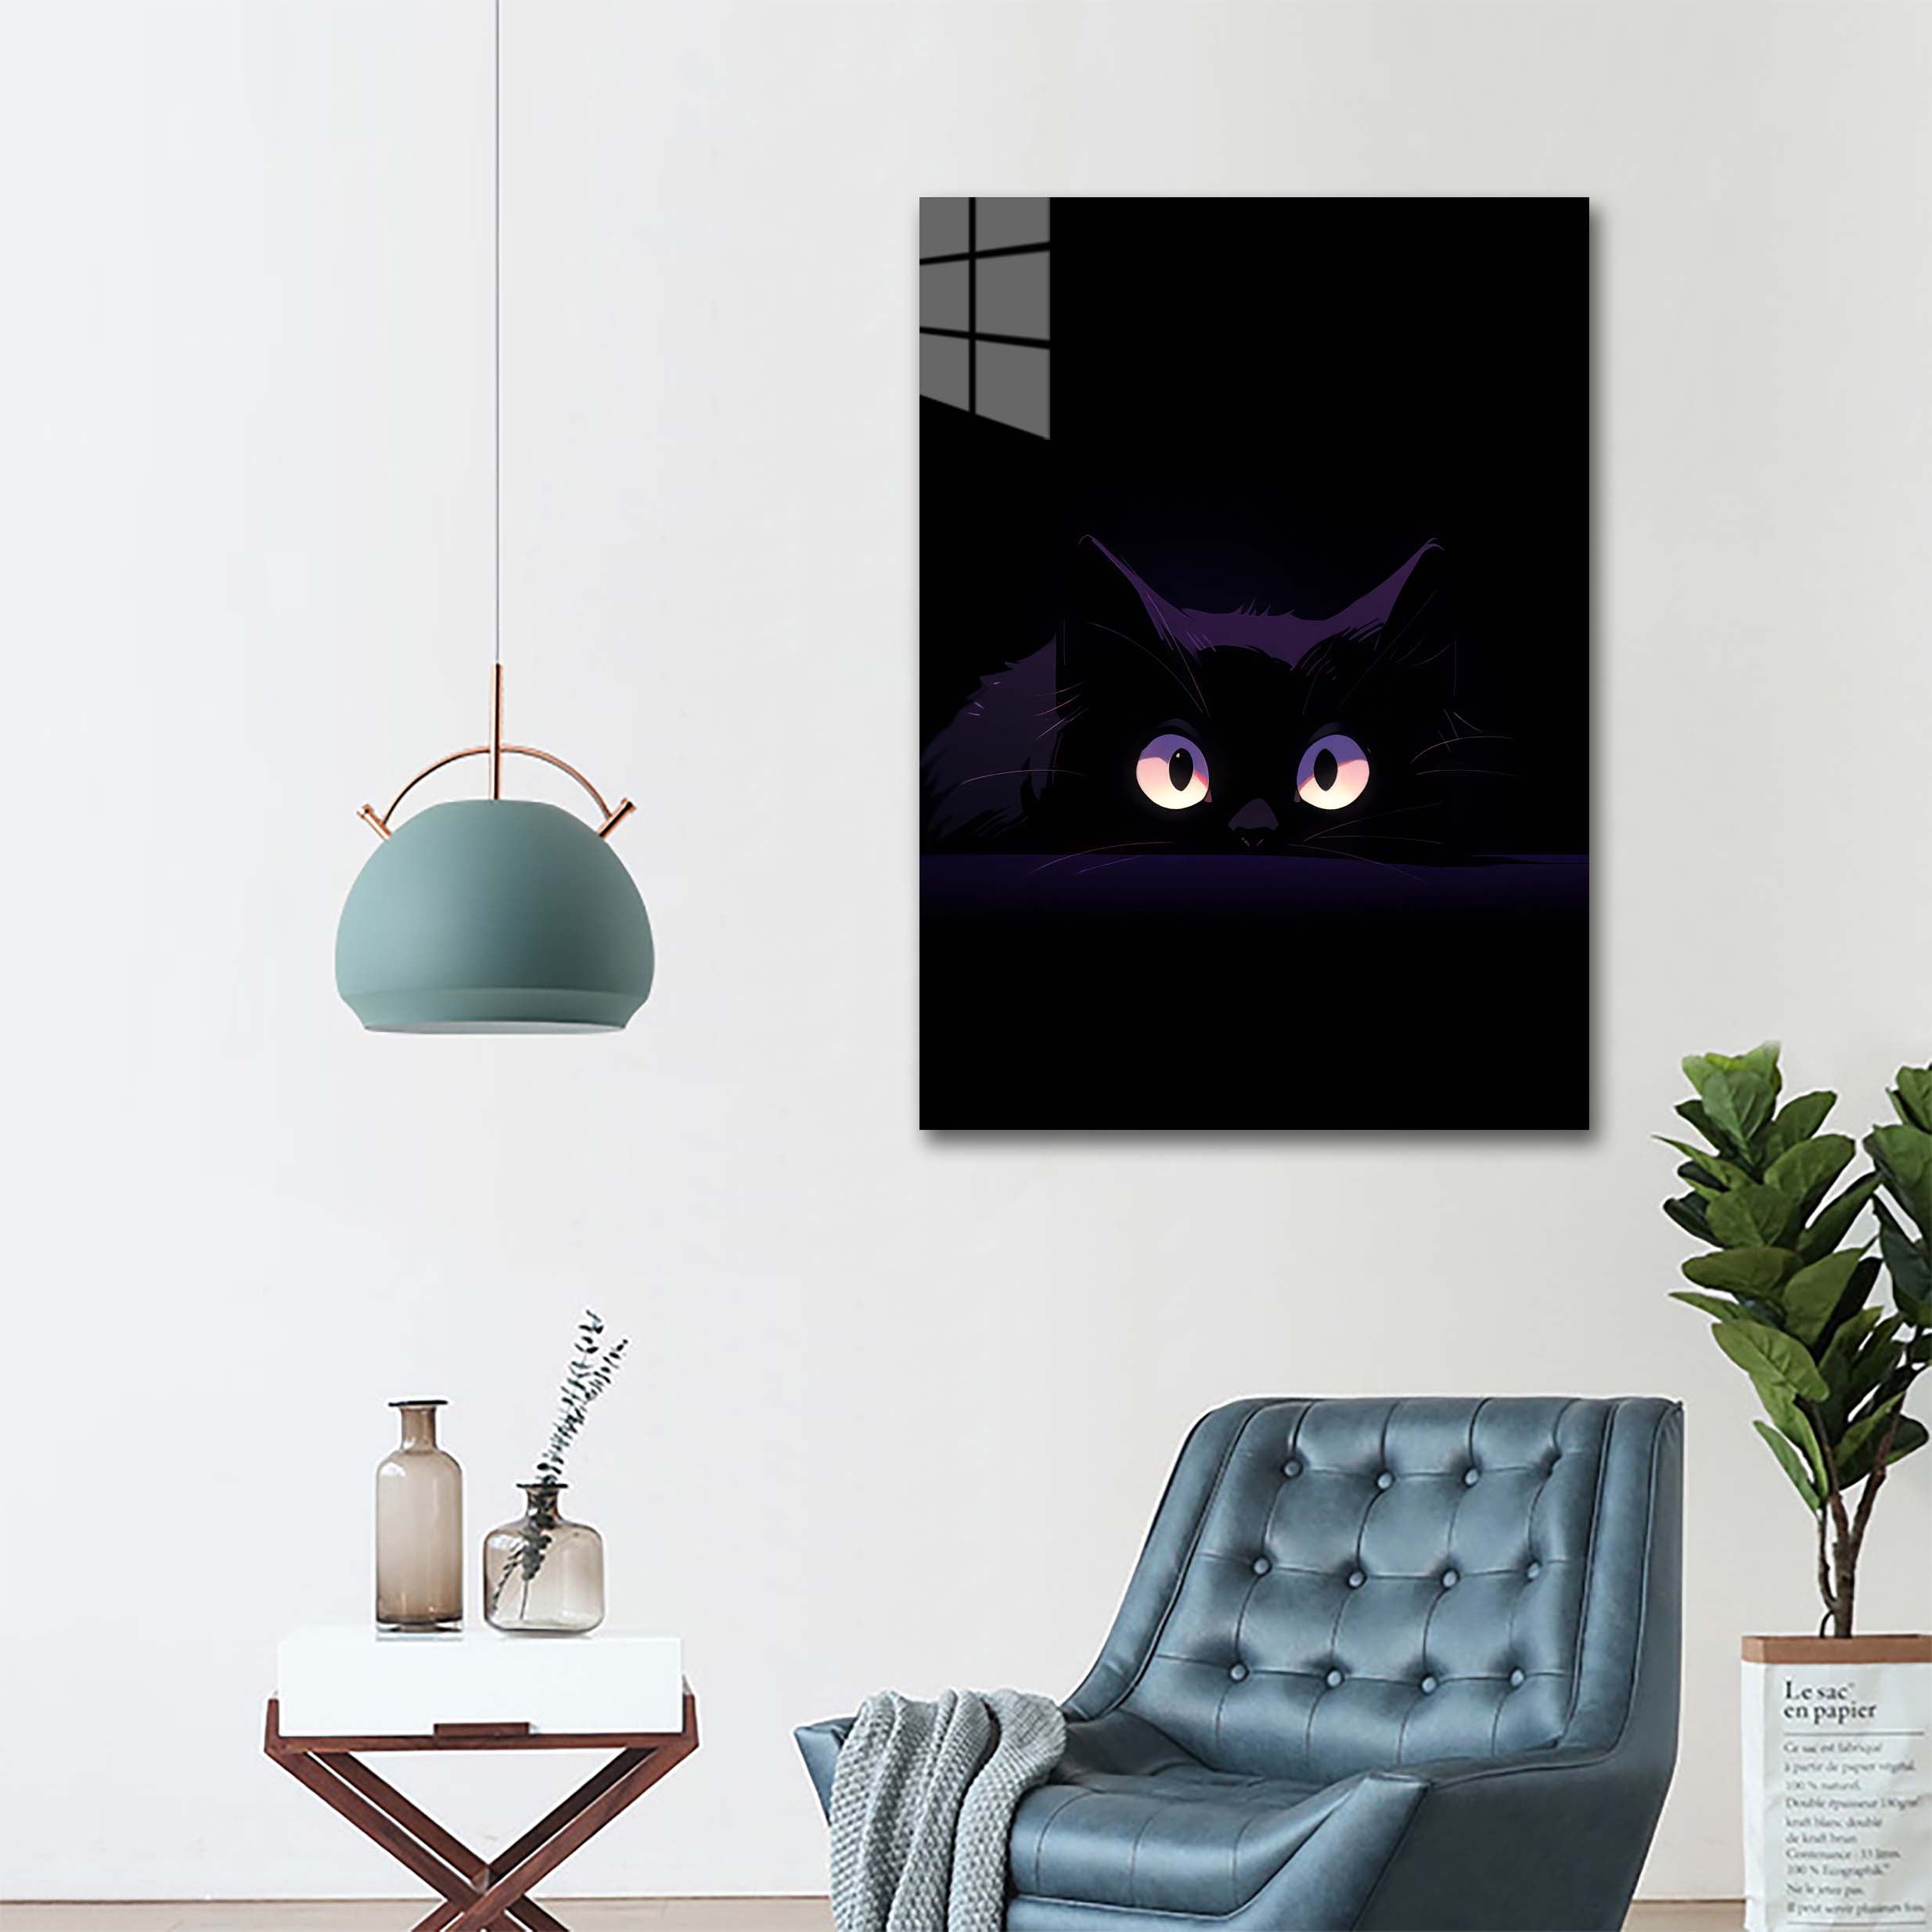 black cat-designed by @1614Sir